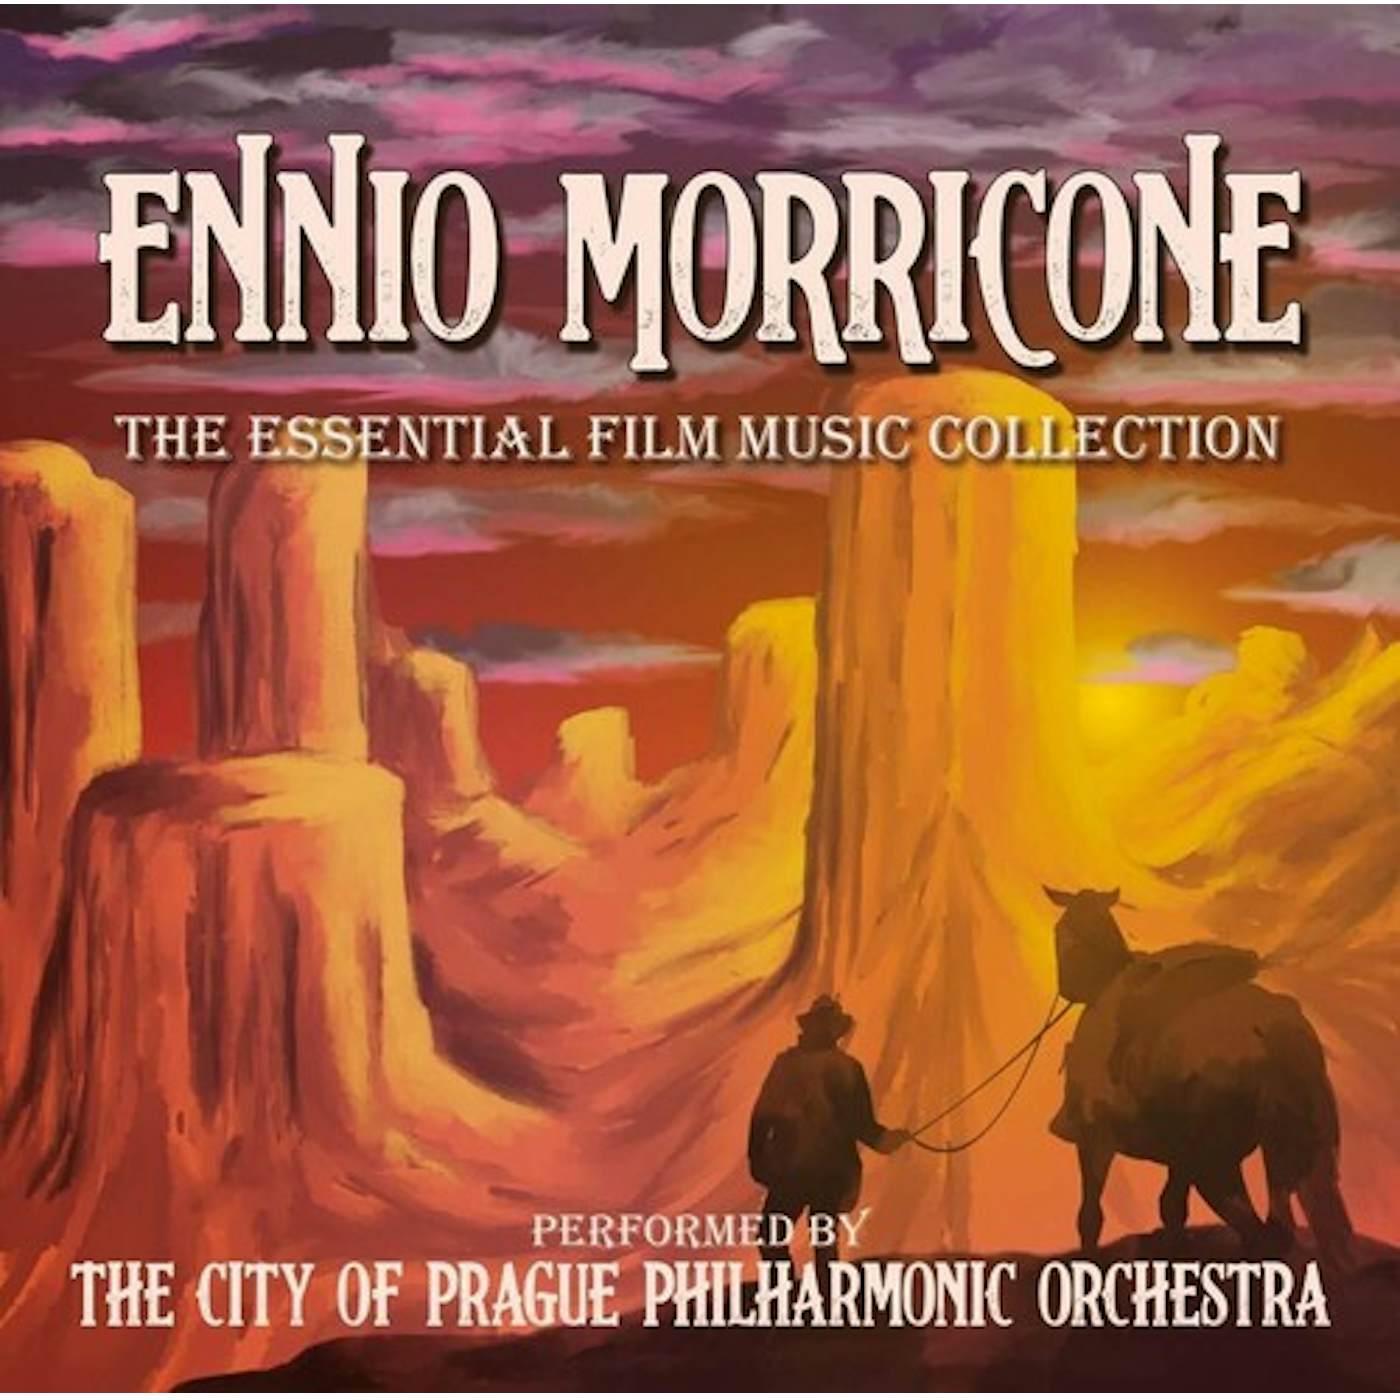 The City of Prague Philharmonic Orchestra ENNIO MORRICONE Vinyl Record